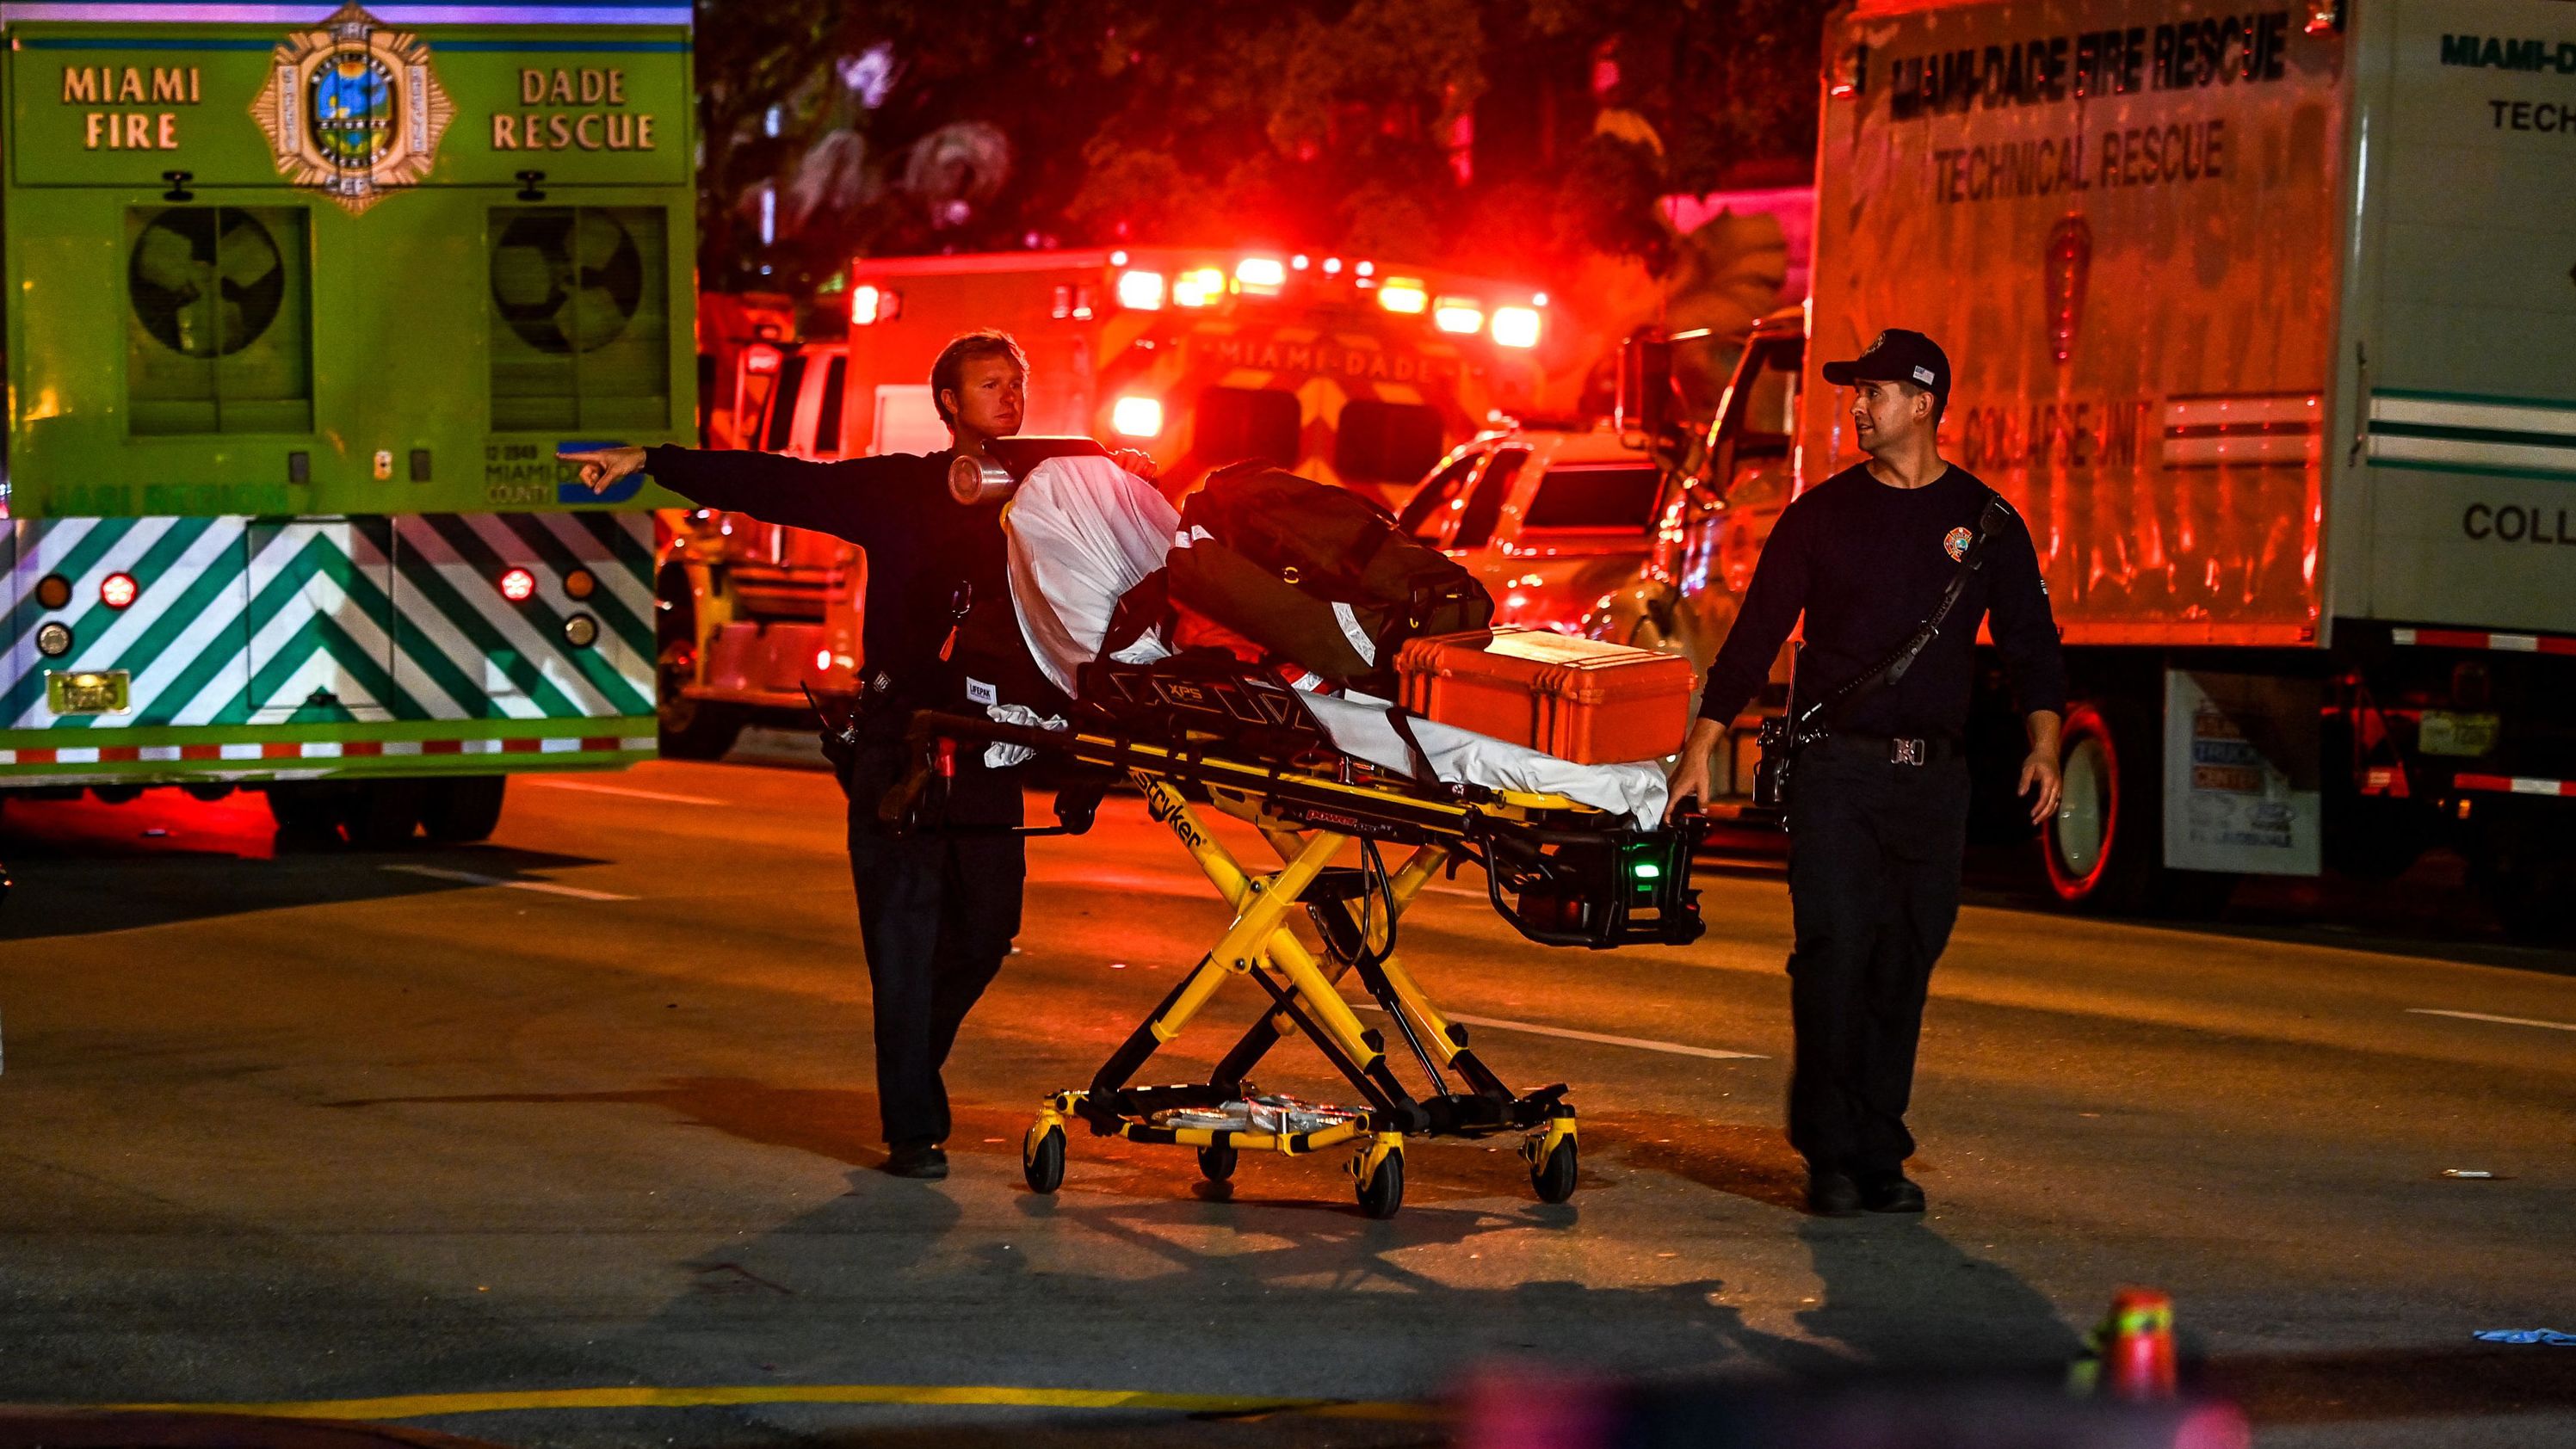 More than 80 rescue units responded to the scene, Miami-Dade Fire Rescue said.